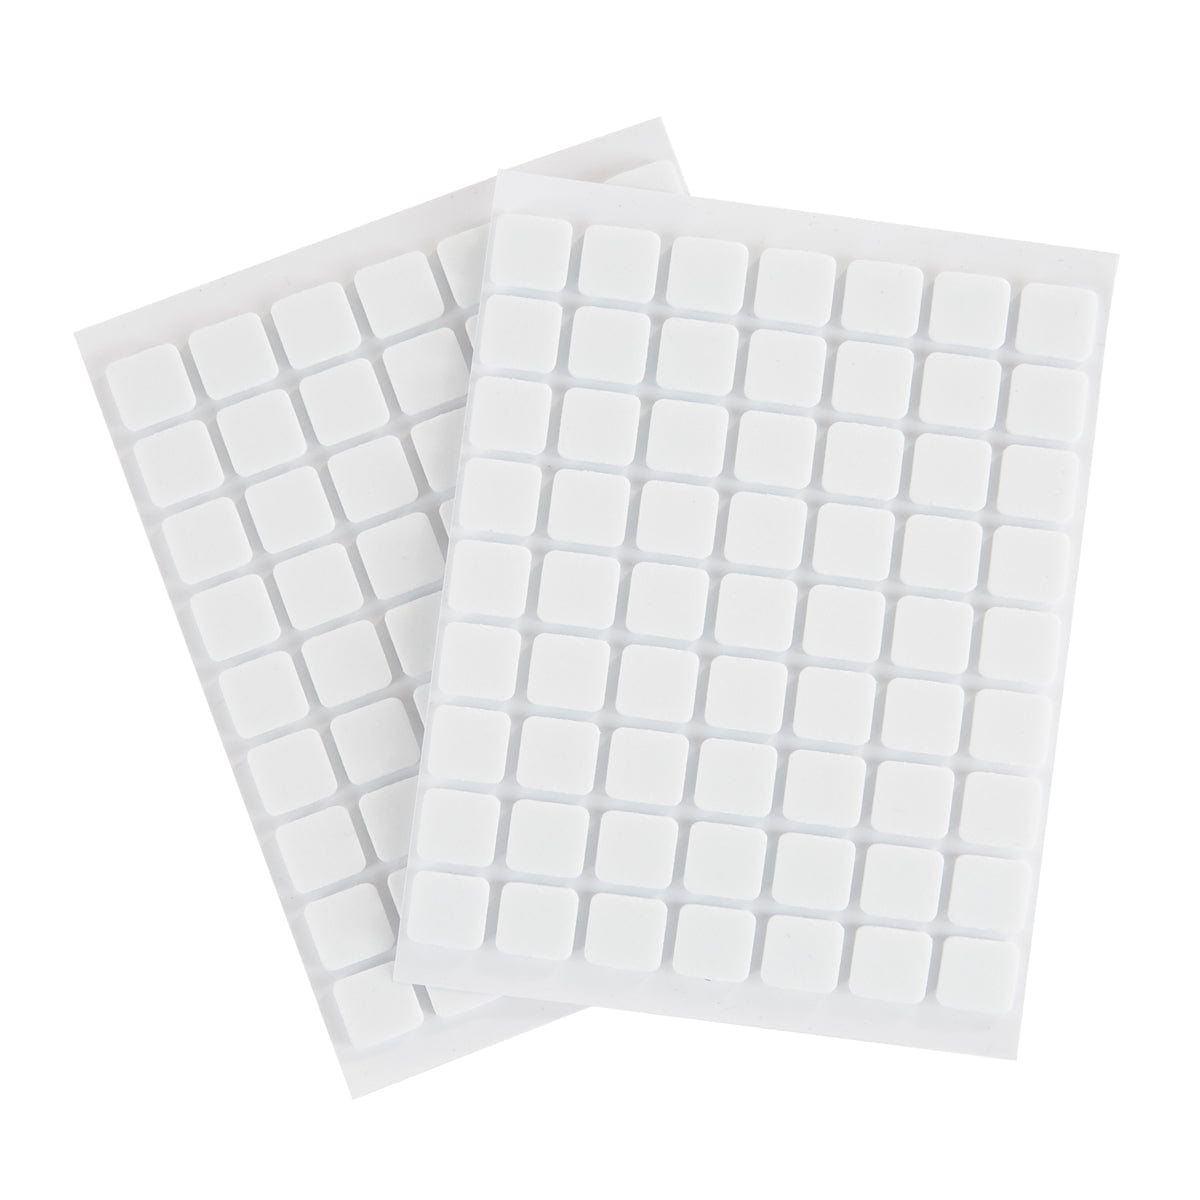 White Foam Adhesive Squares Large 1/2 IN - Spellbinders Paper Arts